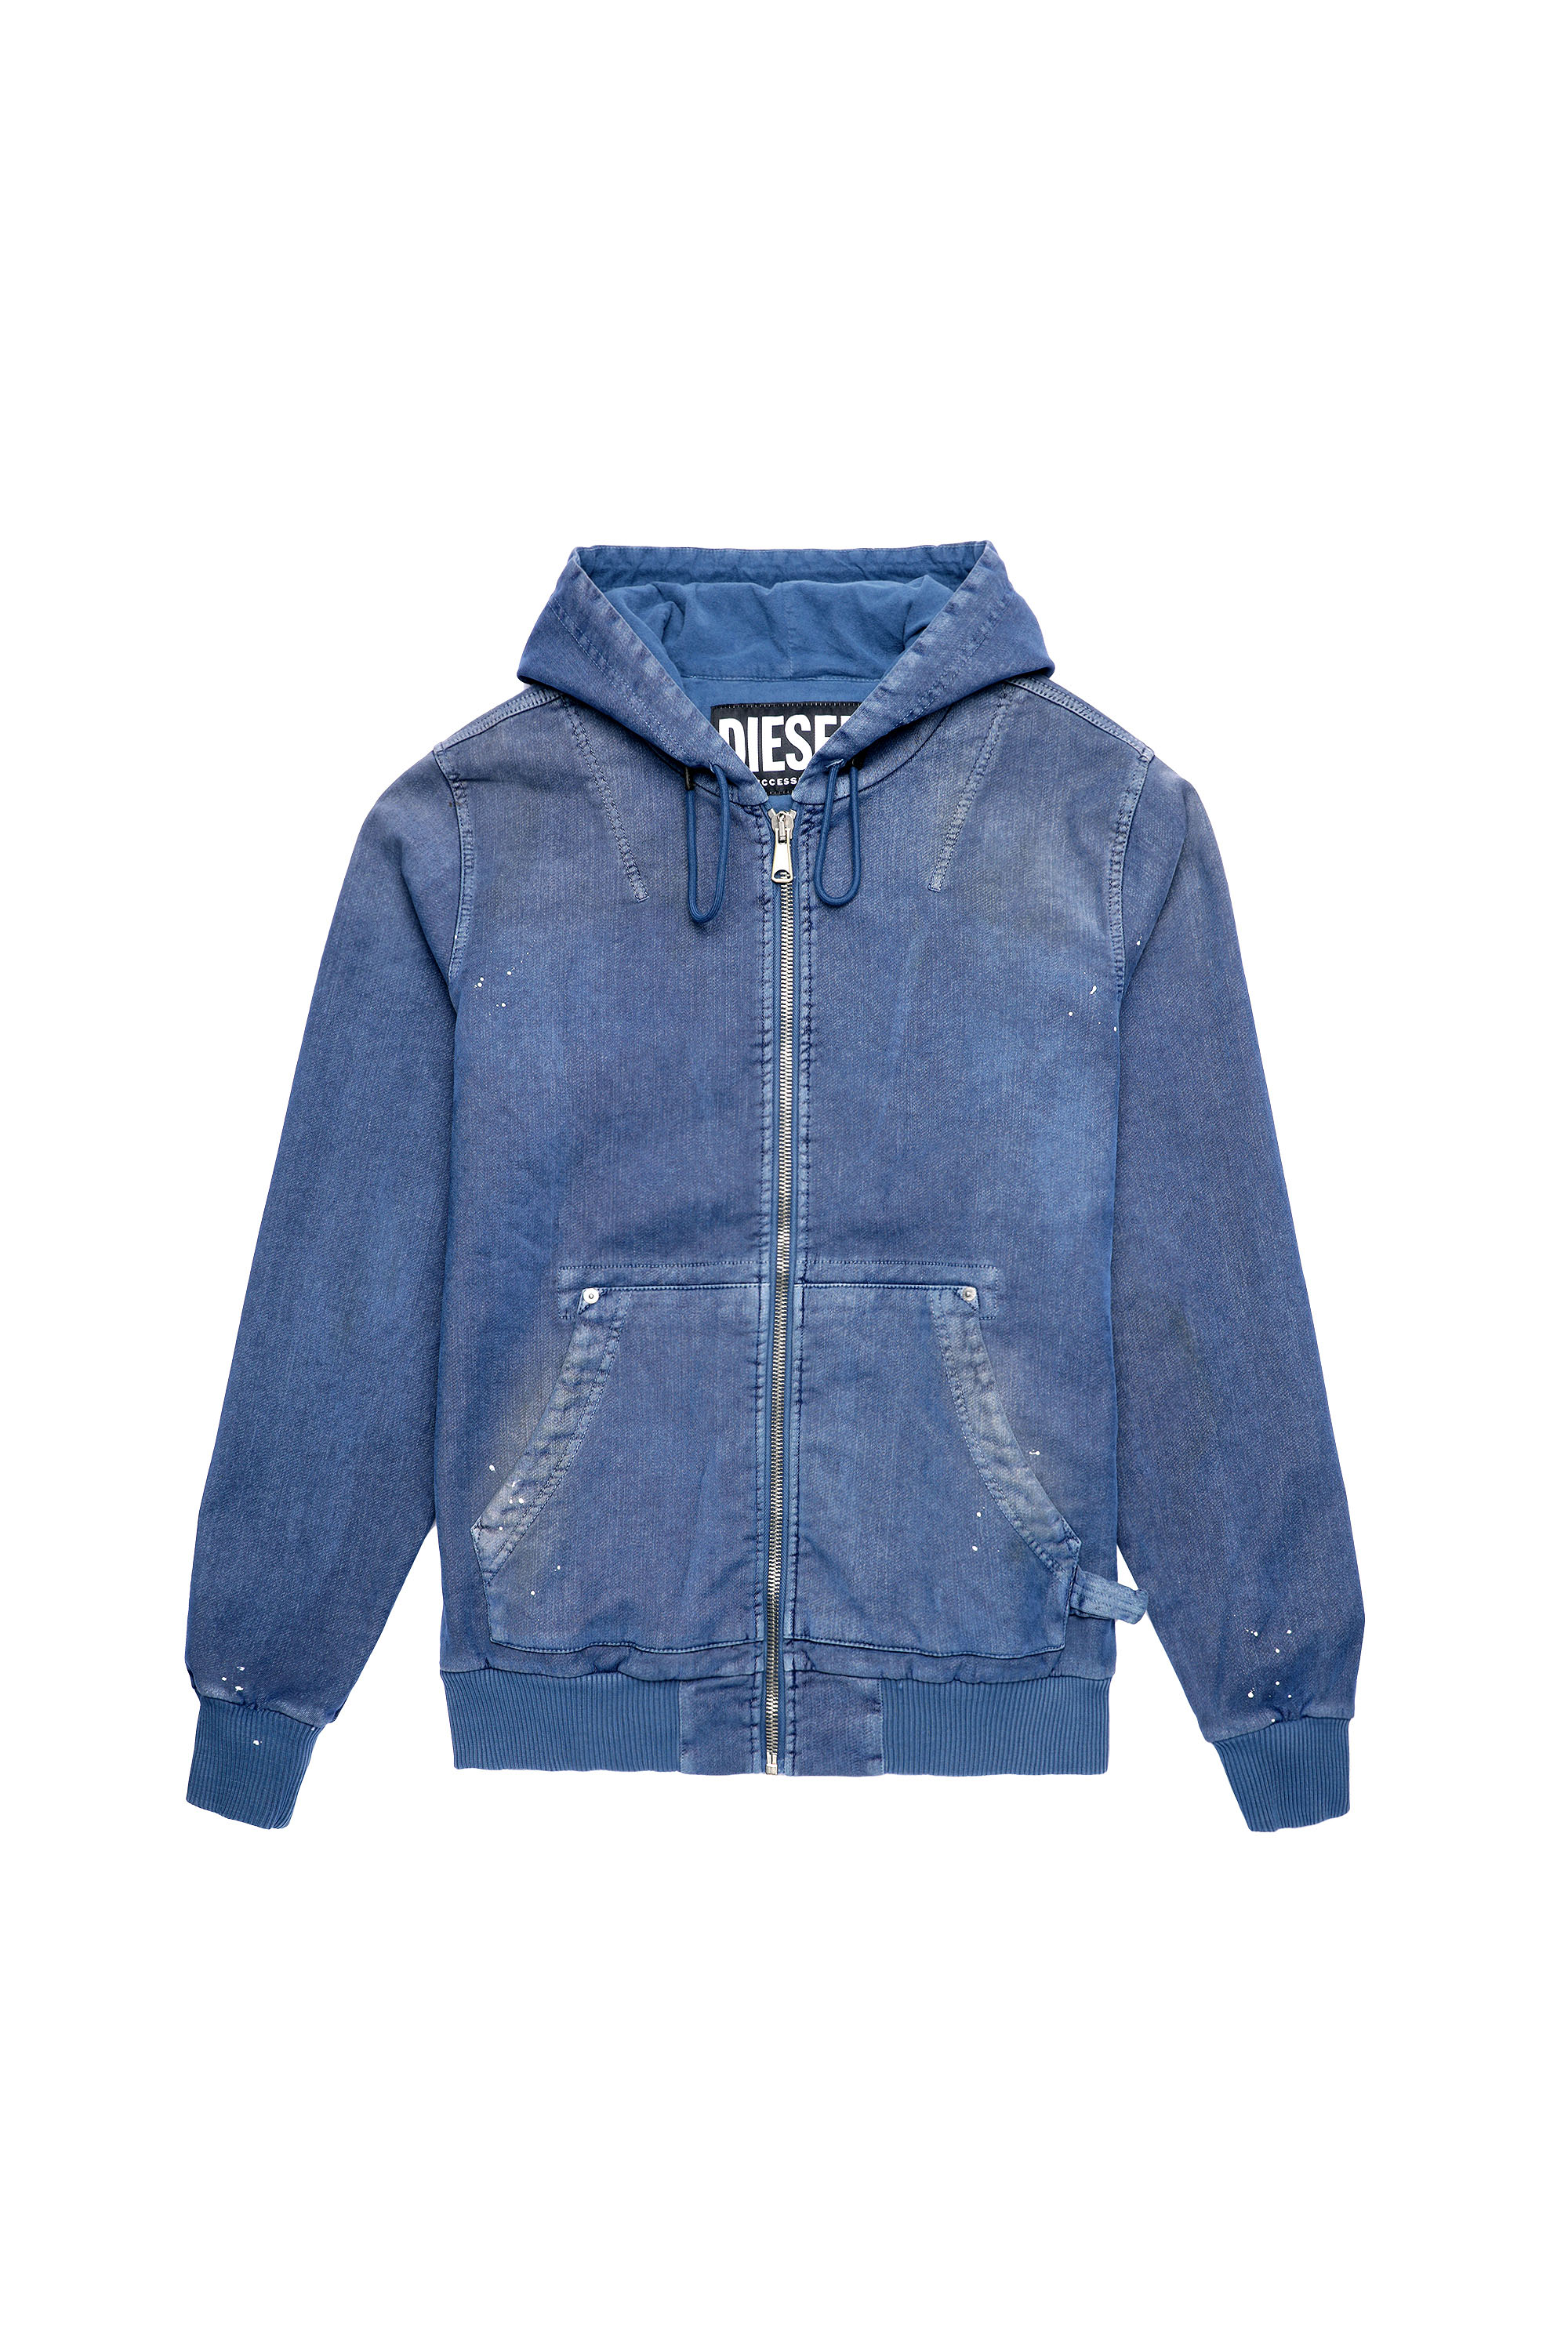 Men's Sale Jackets: 50% Off Winter, Leather & Denim Jackets | Diesel